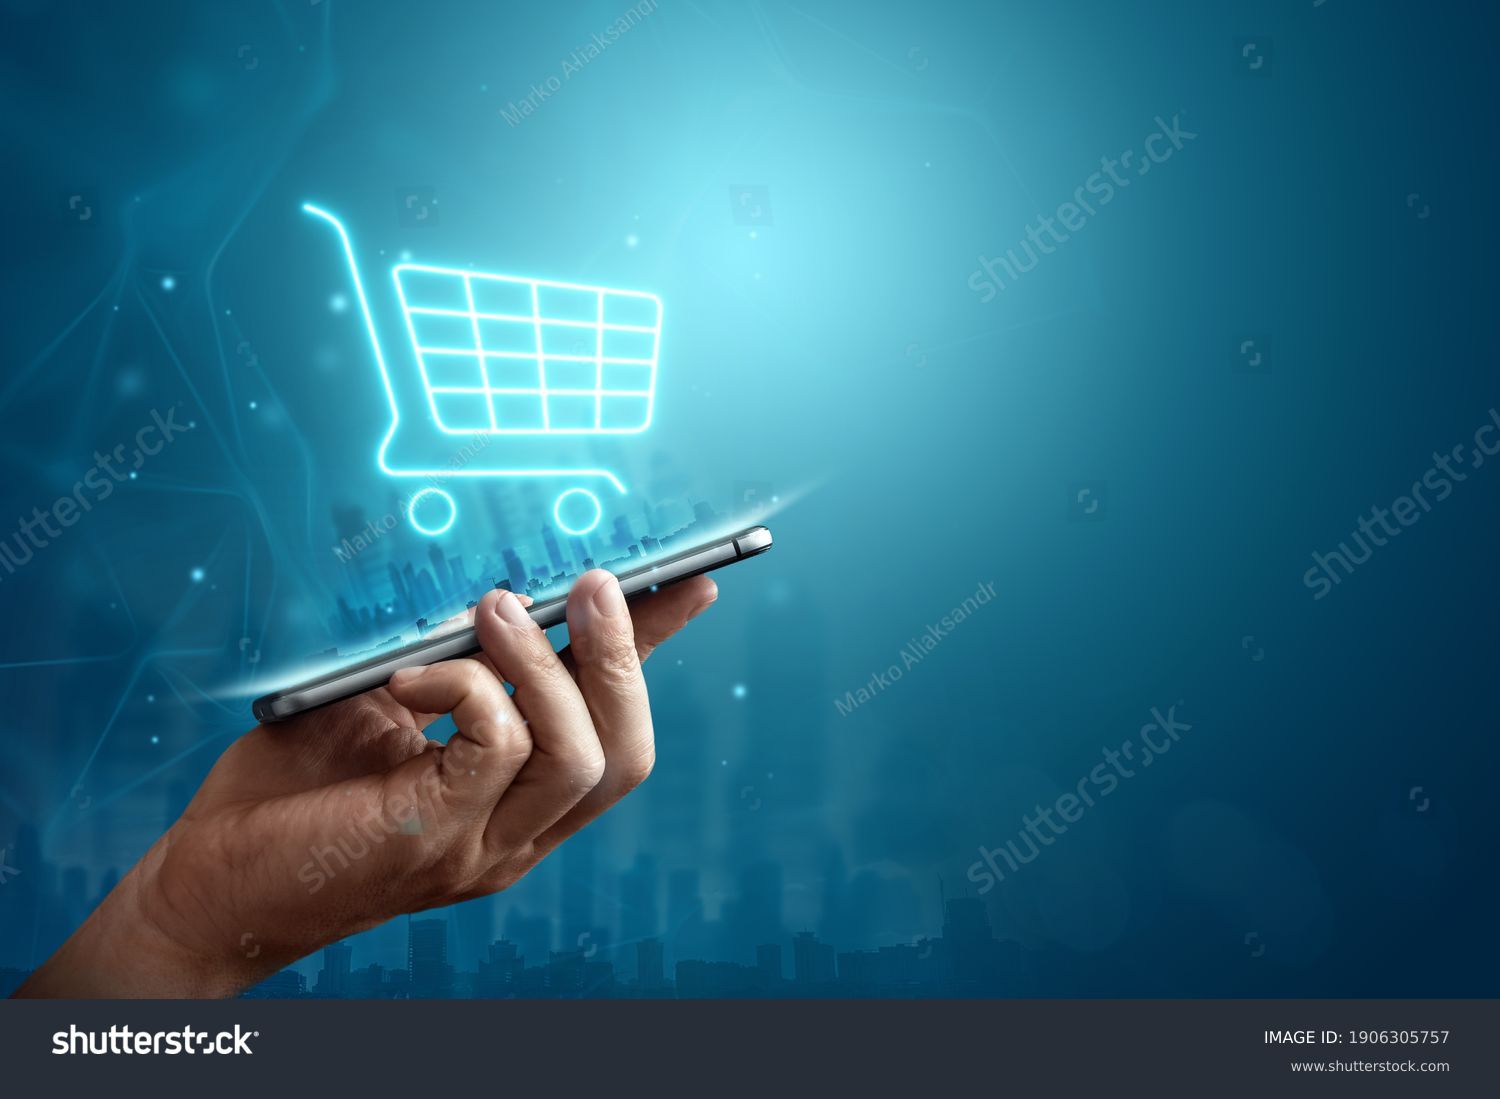 Phone and basket hologram. Online shopping, online store application in a smartphone. Digital Marketing Online #1906305757